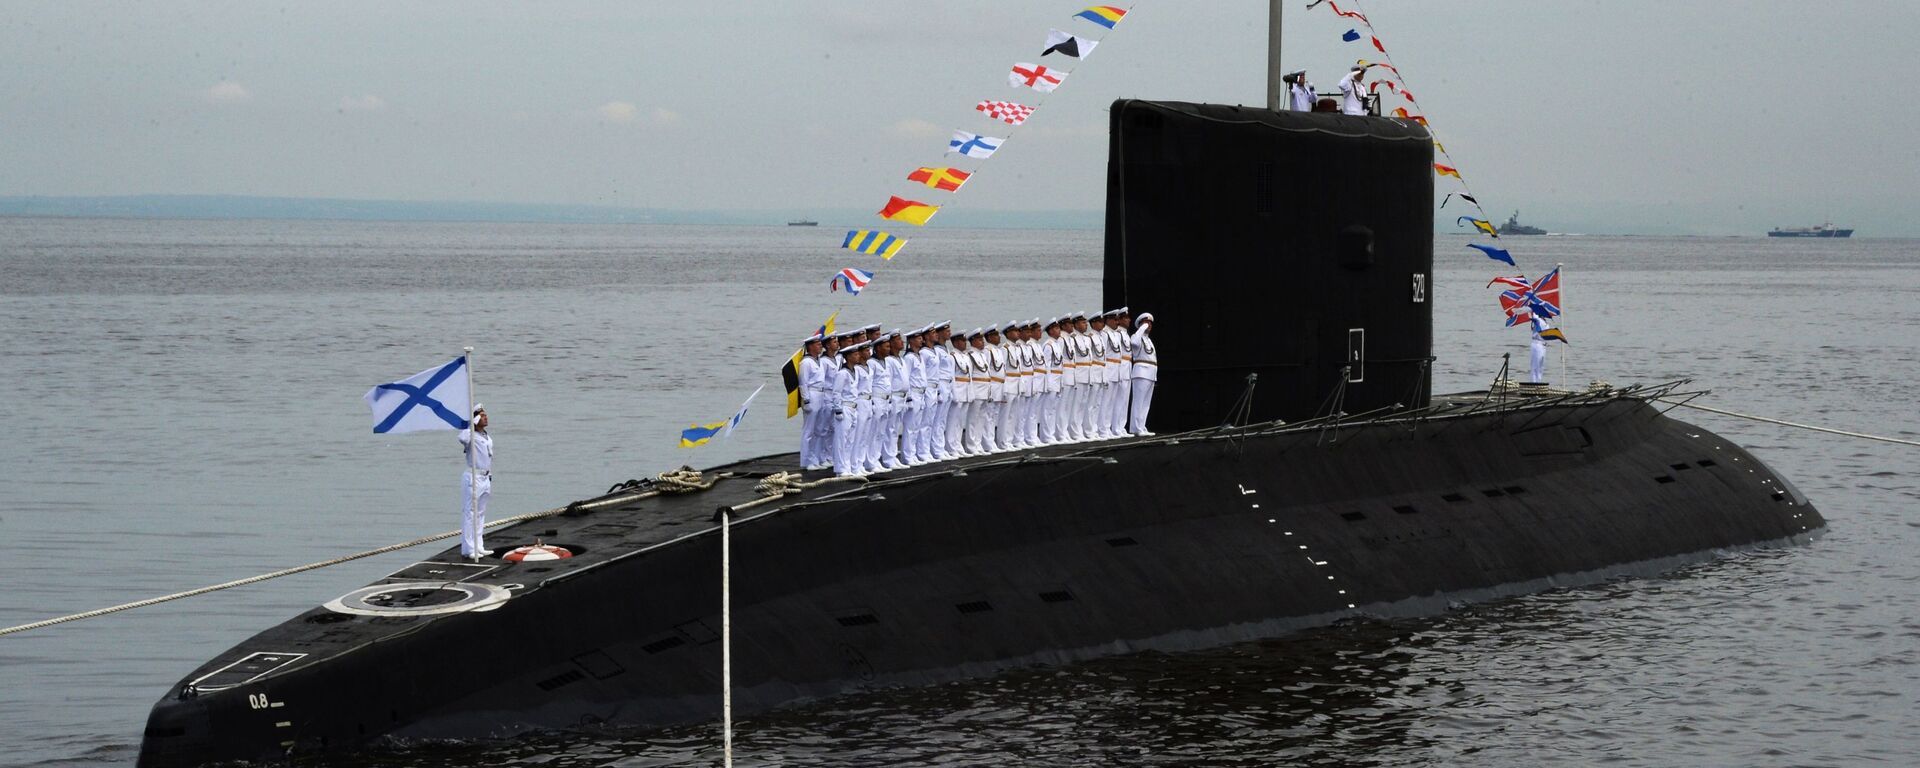 Tàu ngầm Varshavyanka của Nga - Sputnik Việt Nam, 1920, 21.09.2021